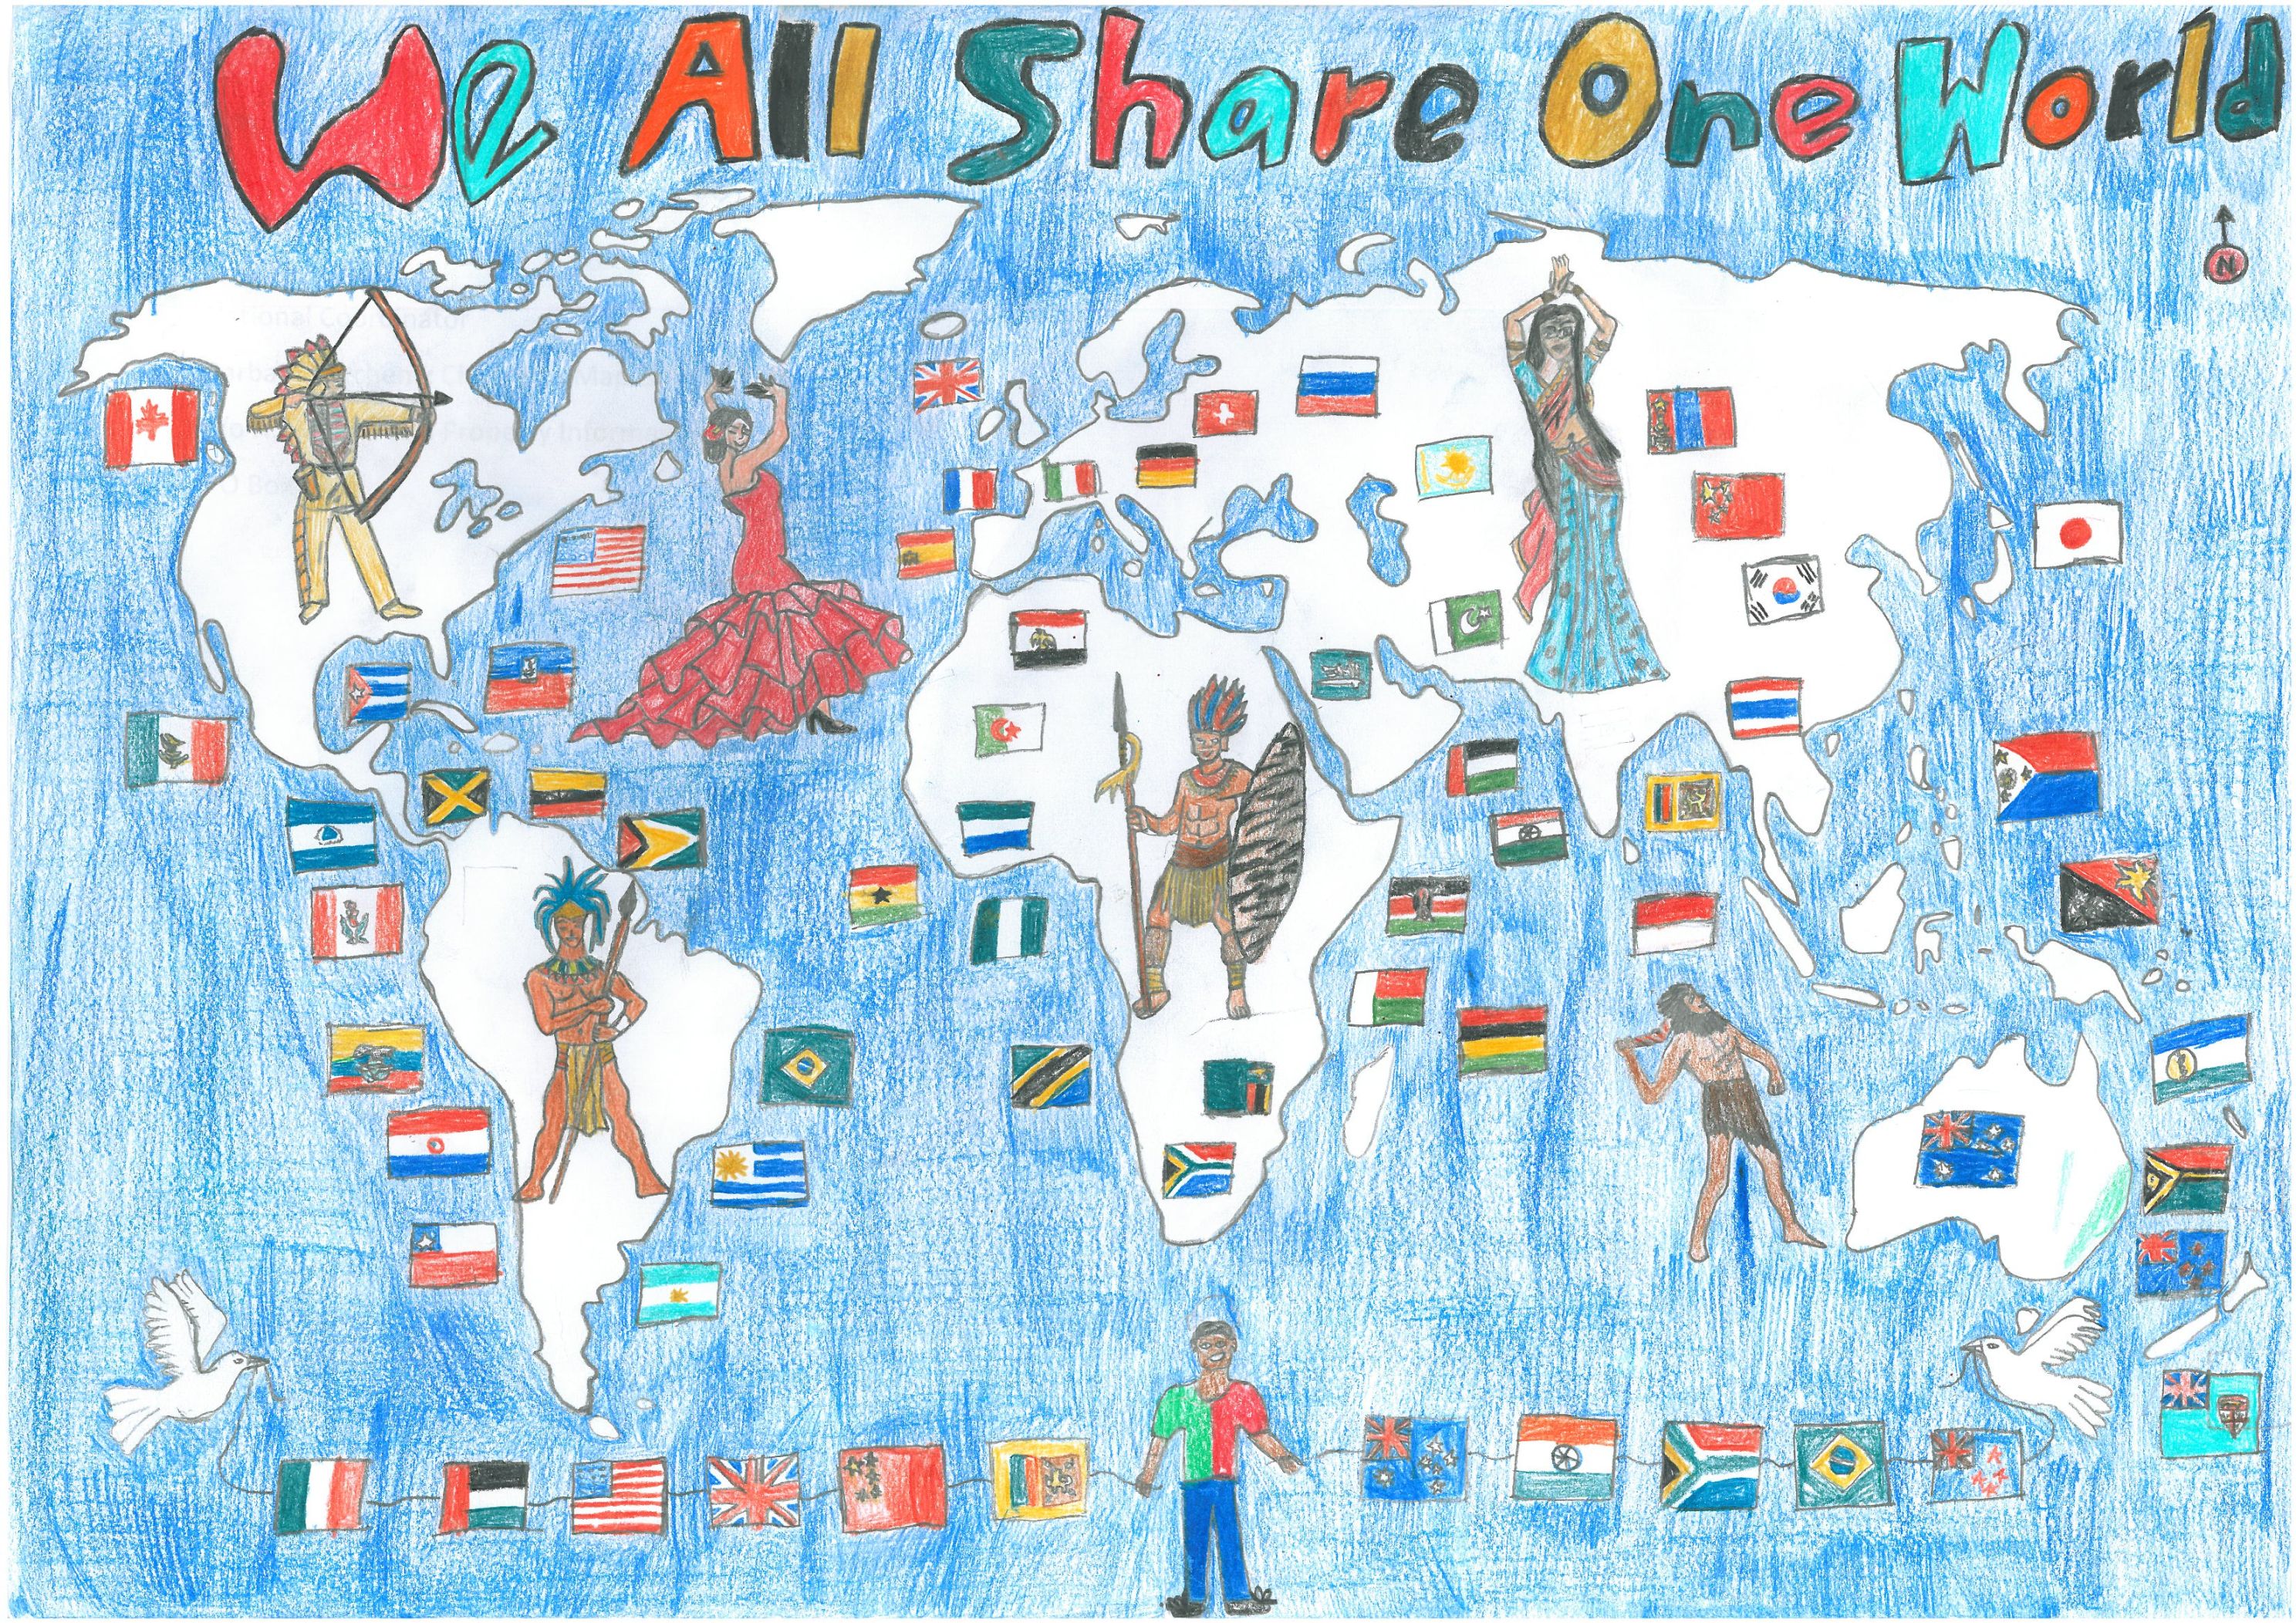 006 - We All Share One World
Thinuka Edirisinghe - Age 12